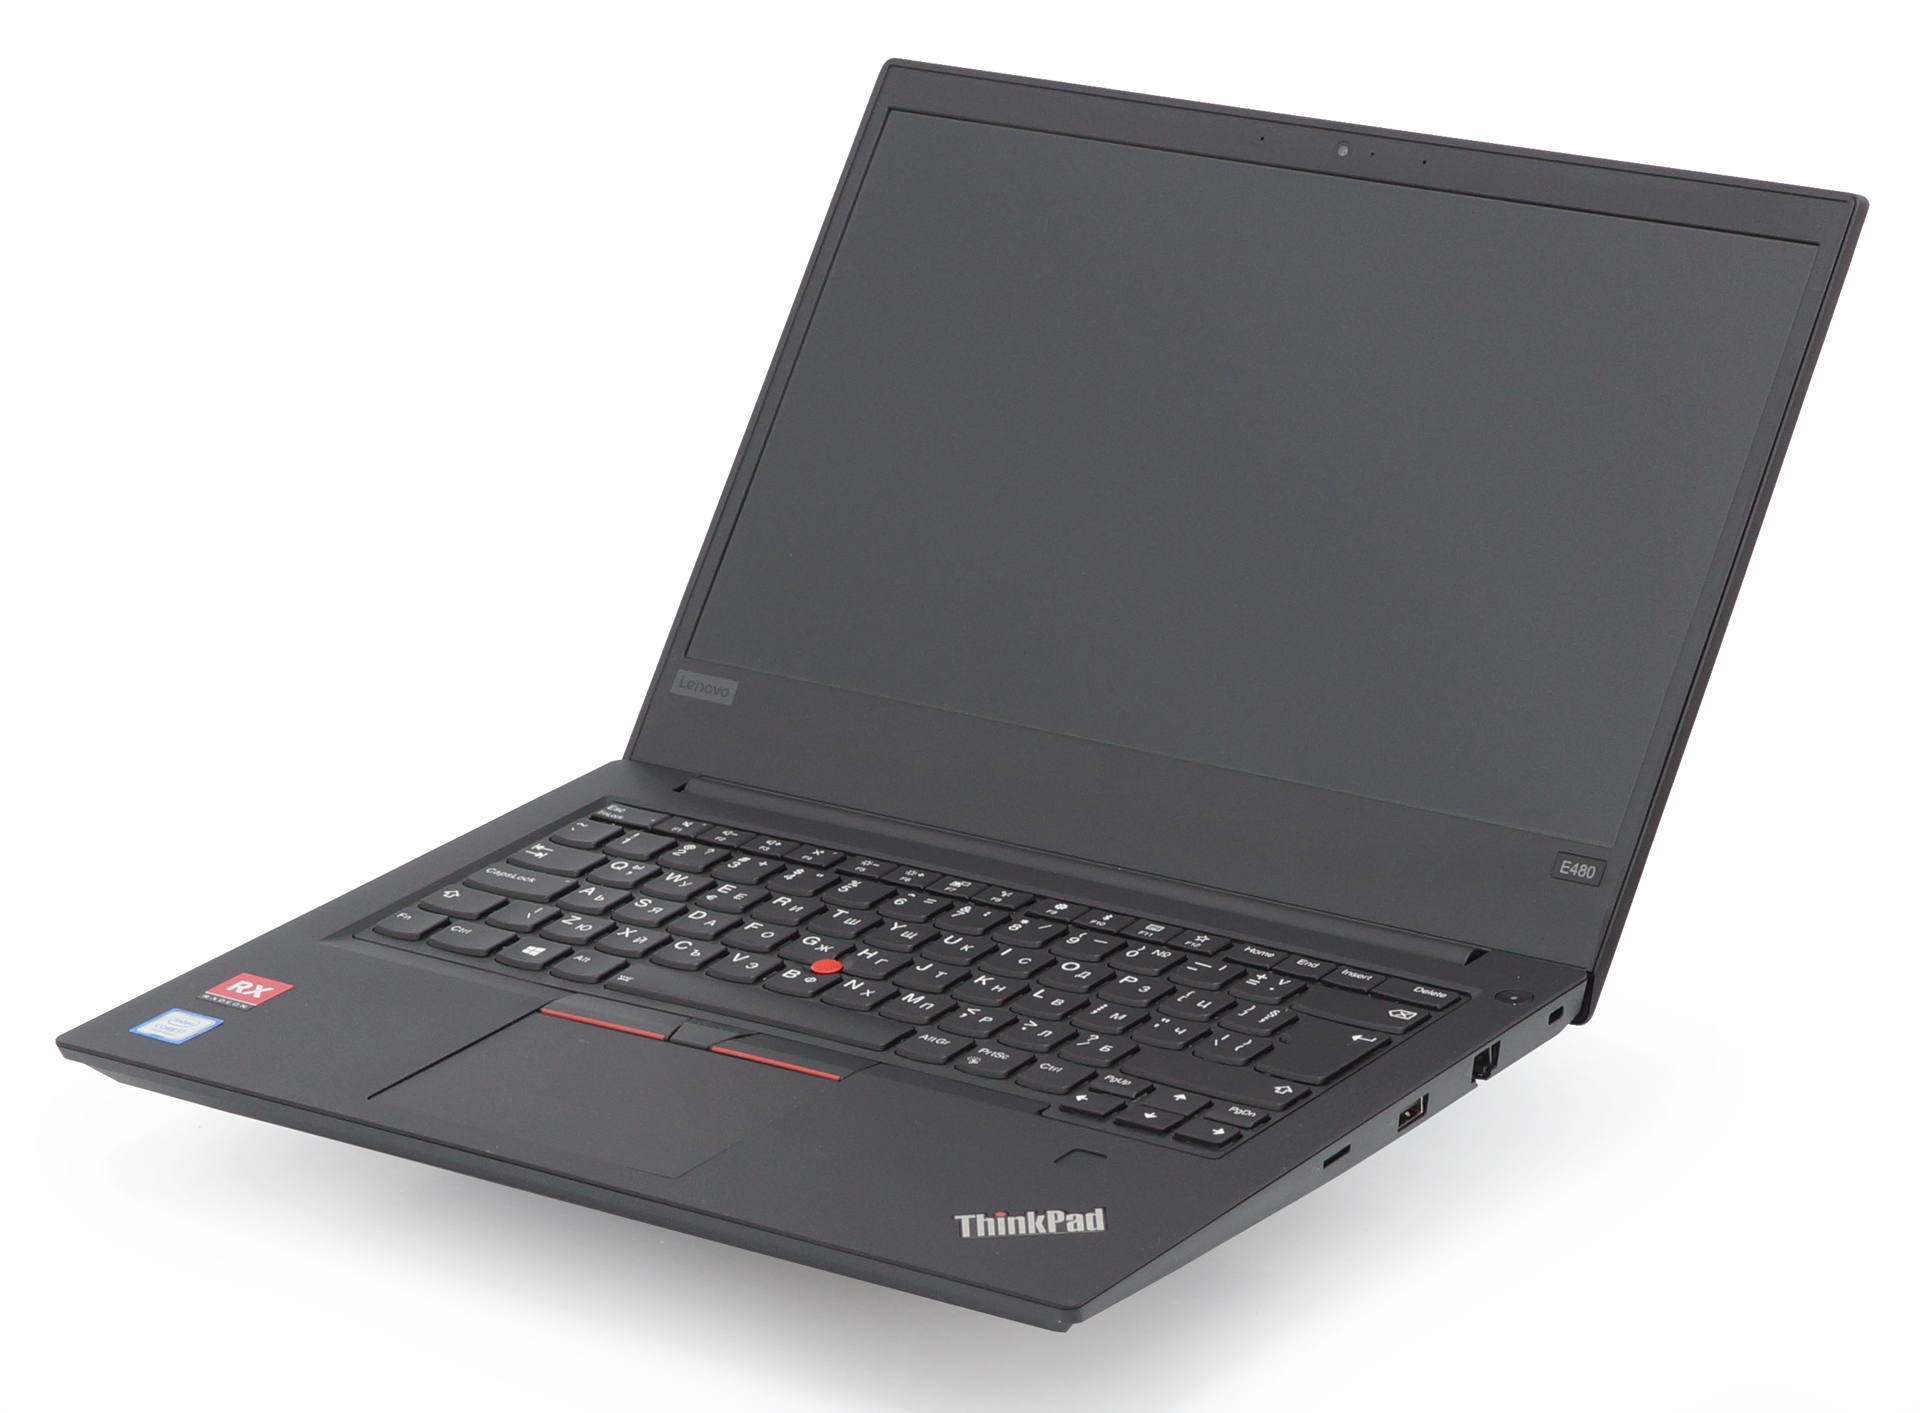 Lenovo ThinkPad E480 review - ThinkPad quality on the budget